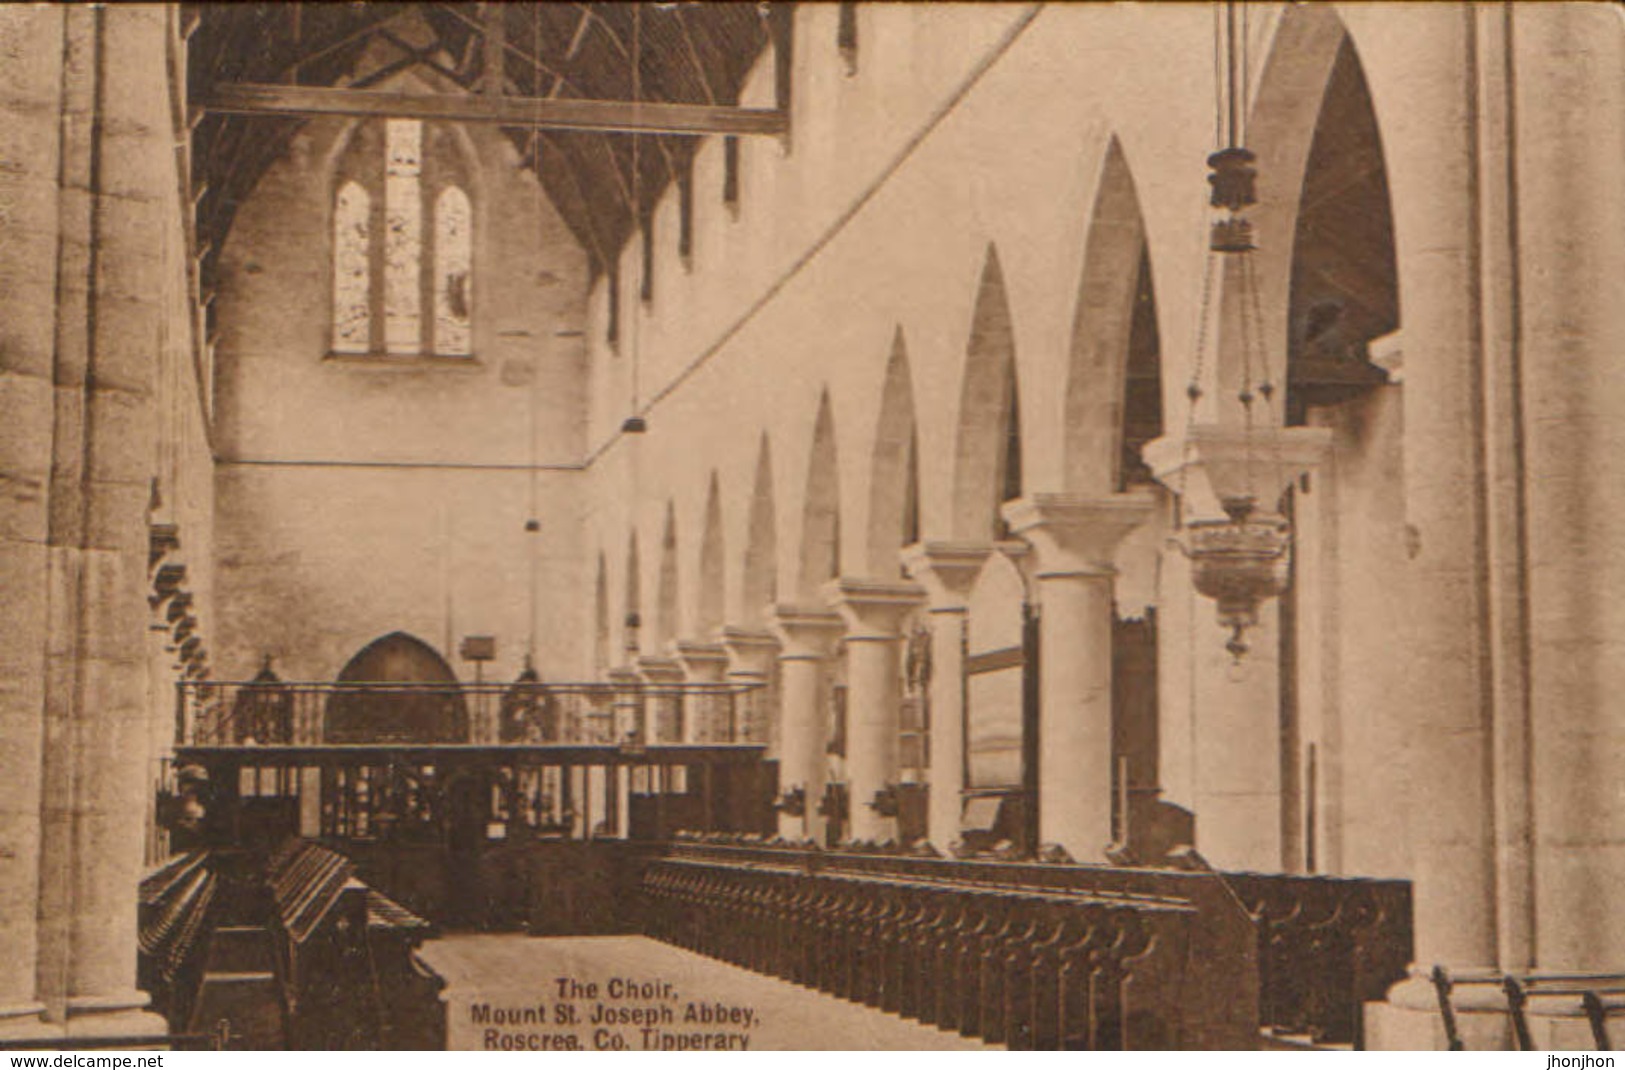 Ireland -  Postcard Unused - The Choir,Mount St Joseph Abbey,Roscrea,Co.Tipperary - Tipperary